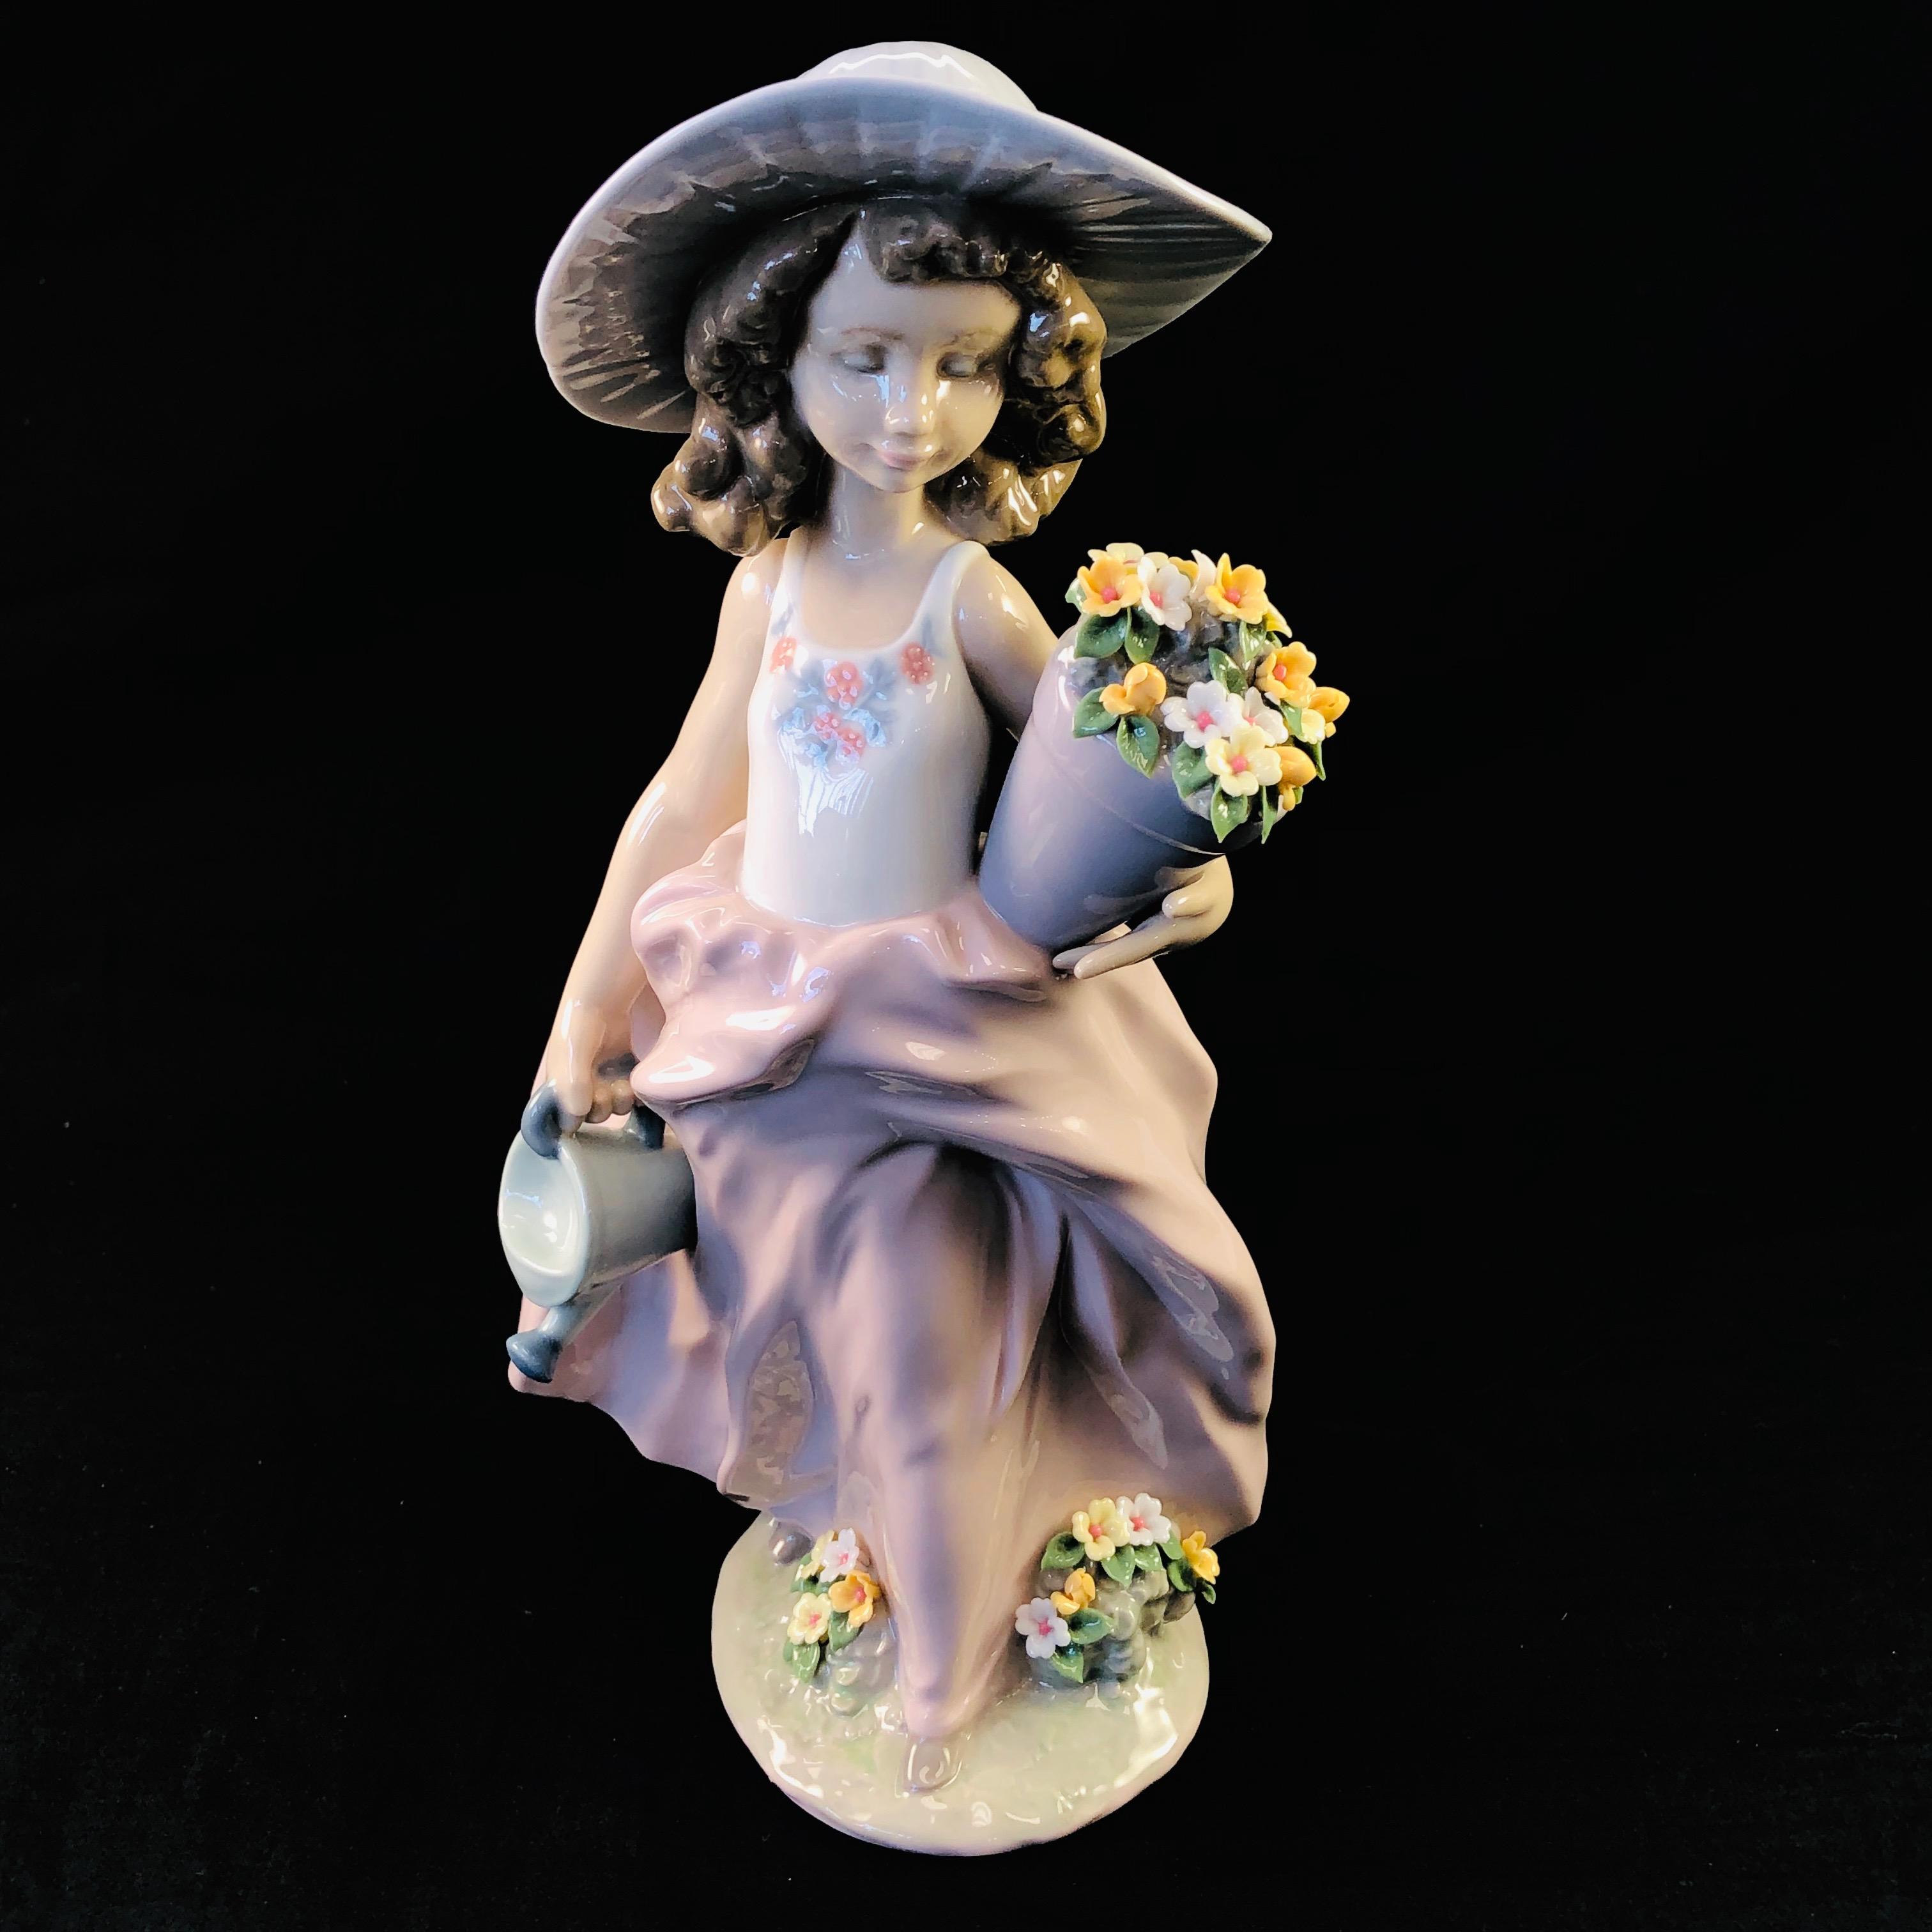 Estate Lladro #7676 "A Wish Come True" porcelain figurine with original box